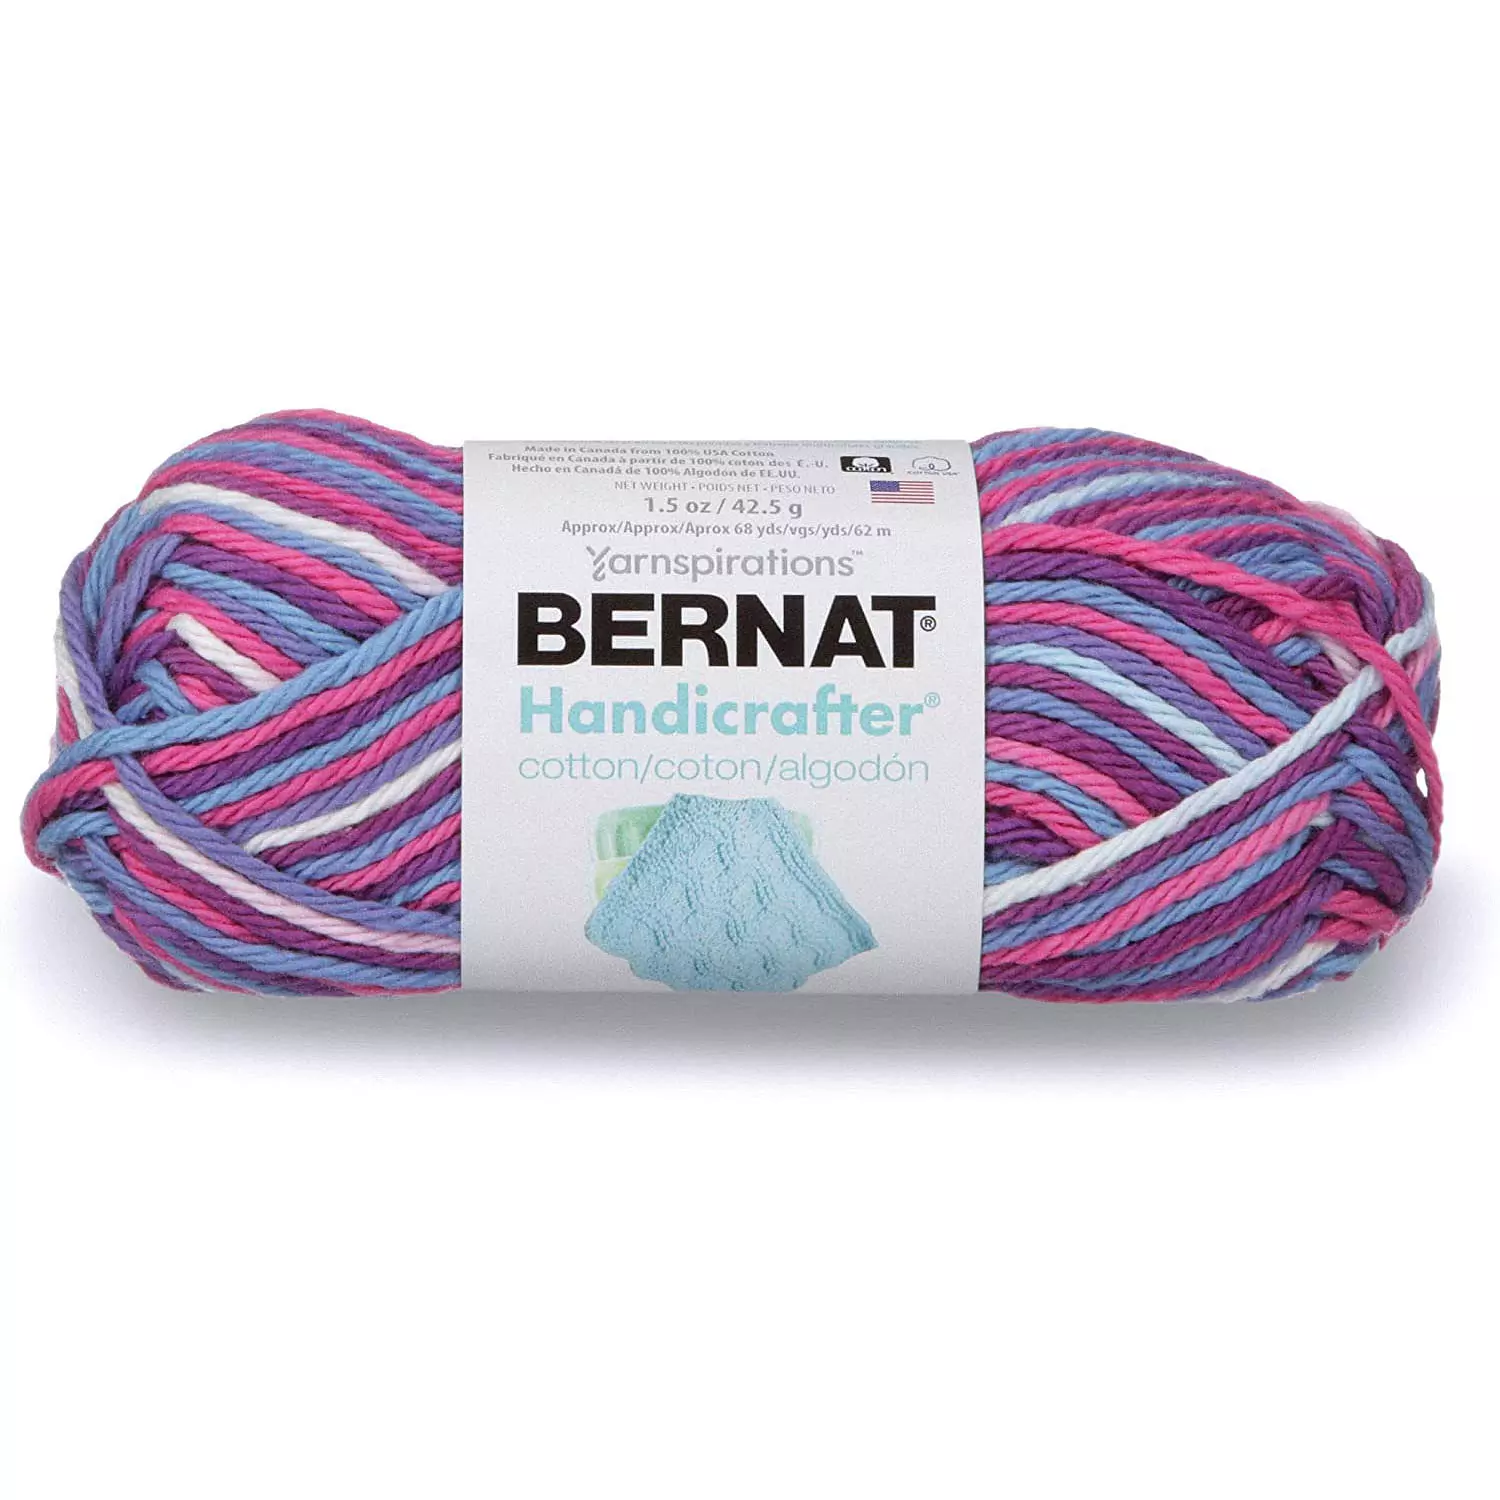 Bernat Handicrafter - Laine en coton, violet perk ombrage